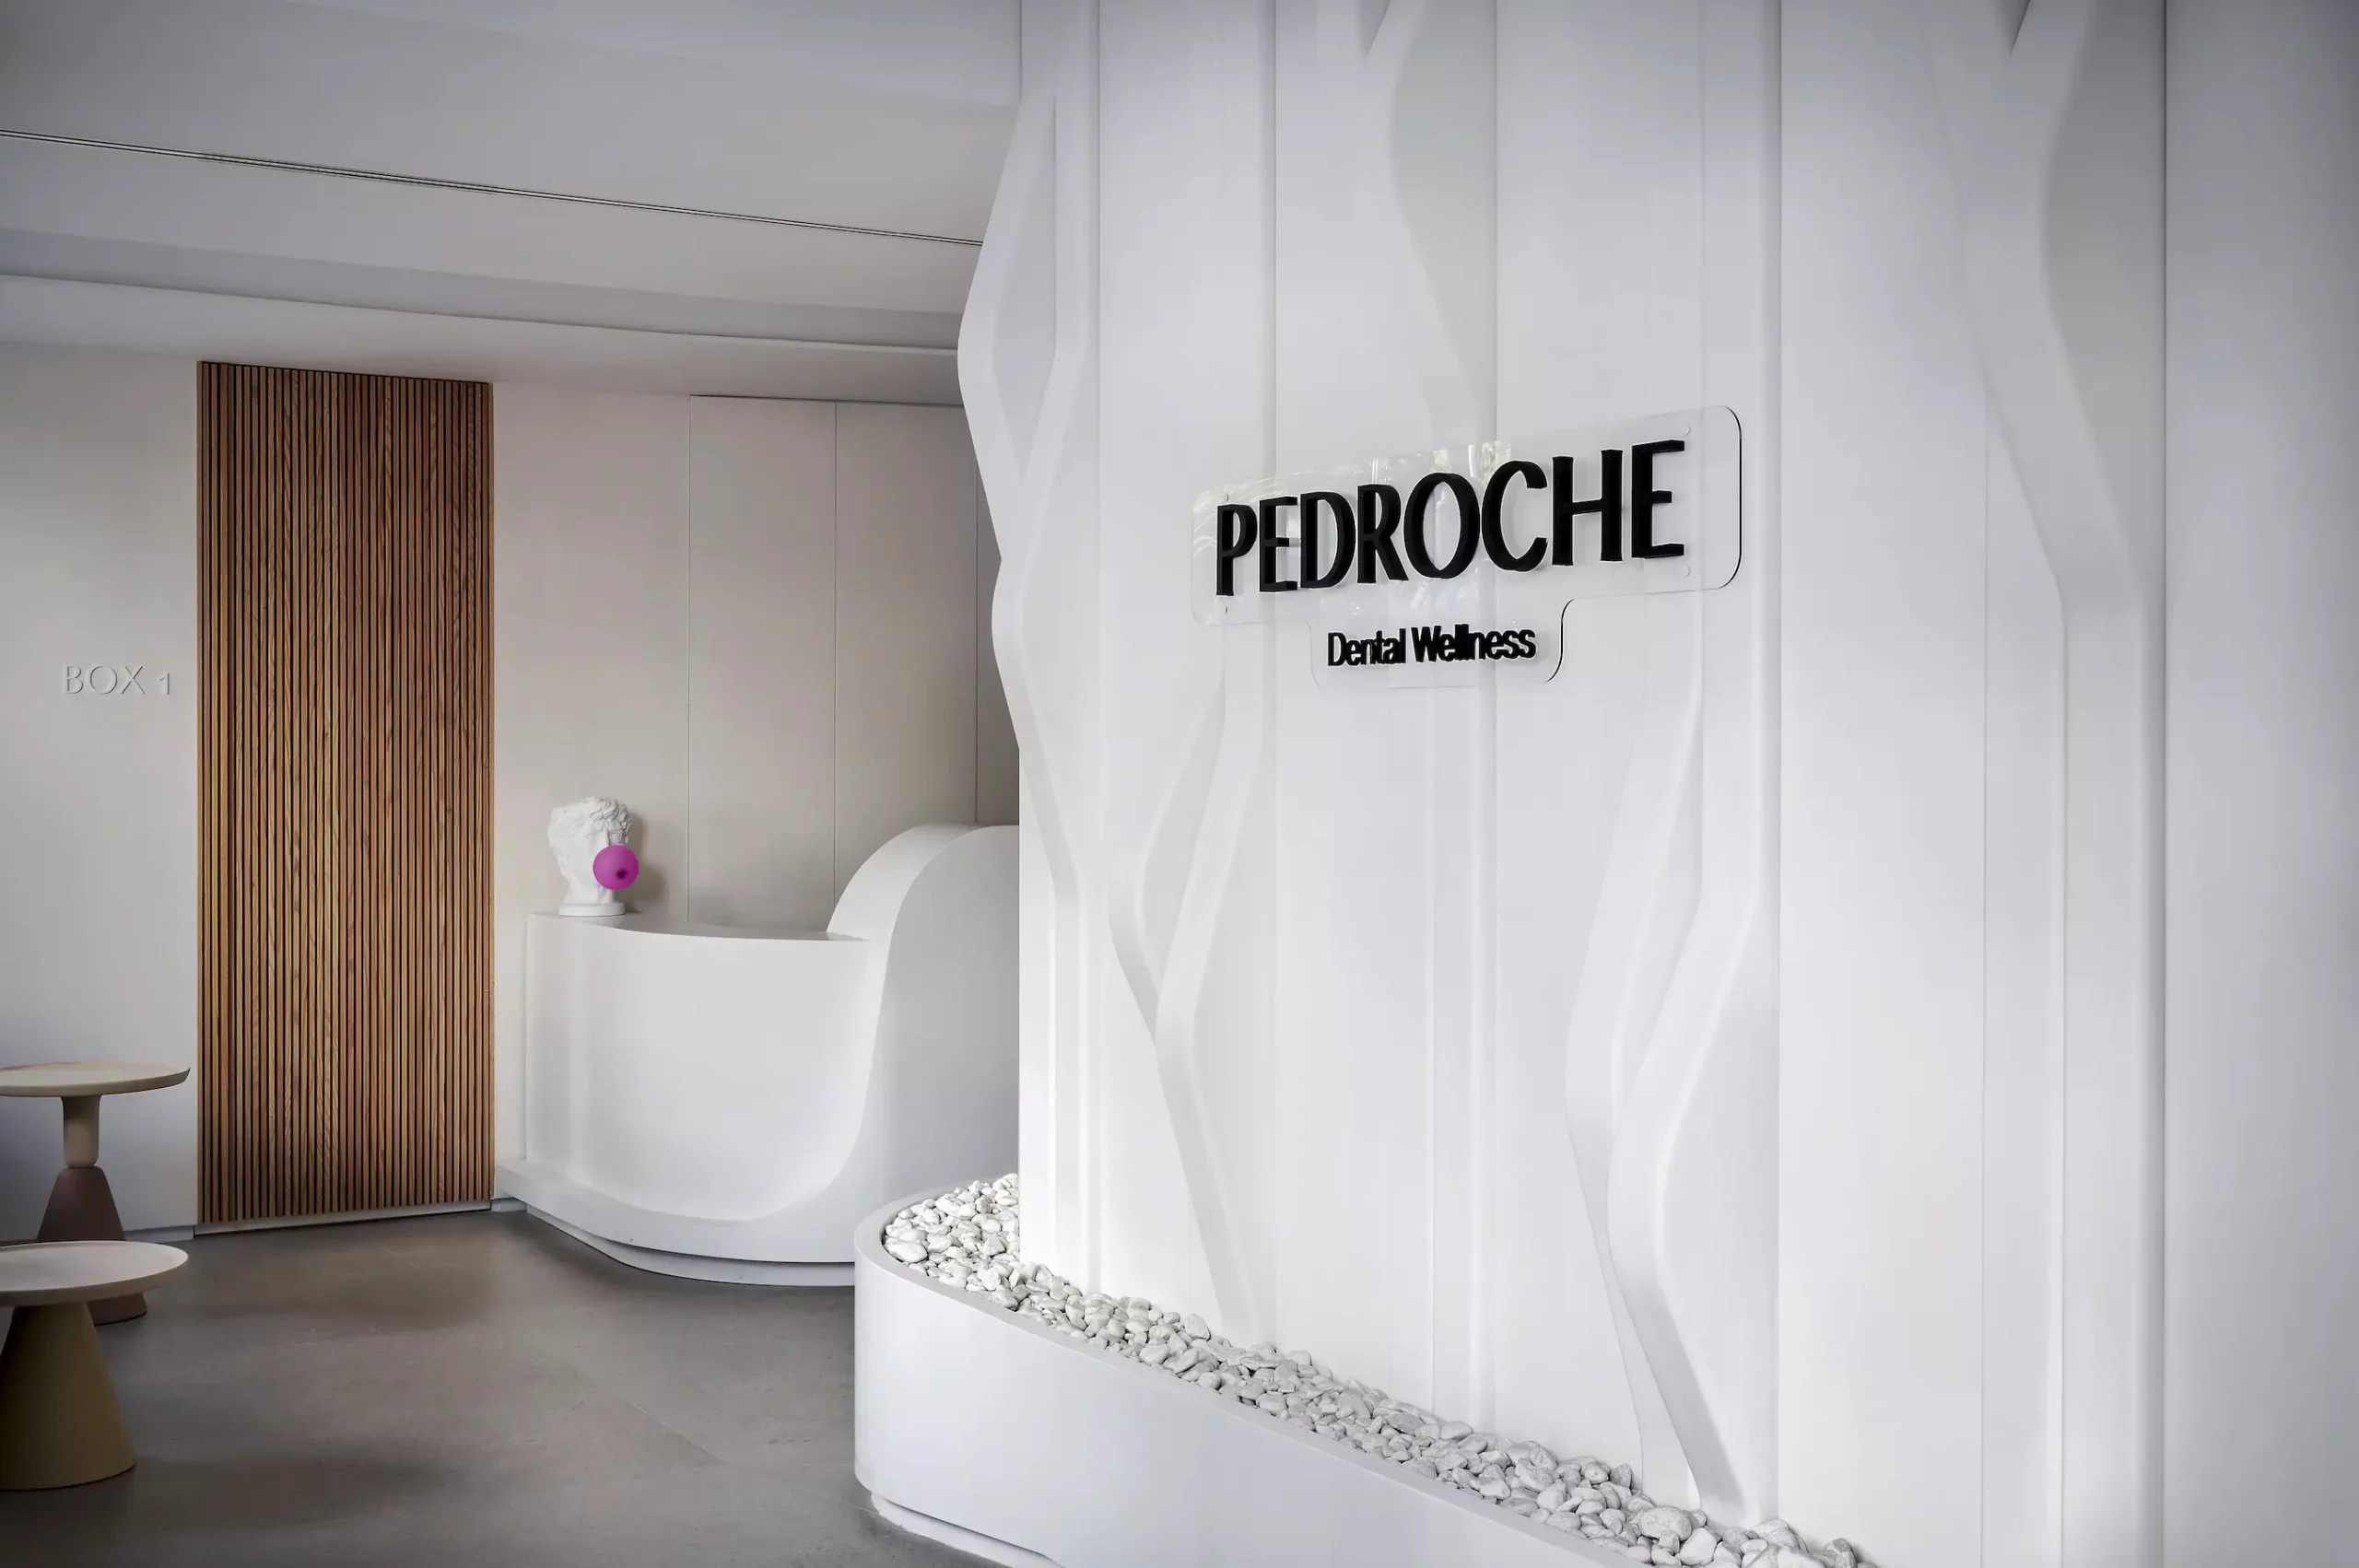 Image of Pedroche dental clinic